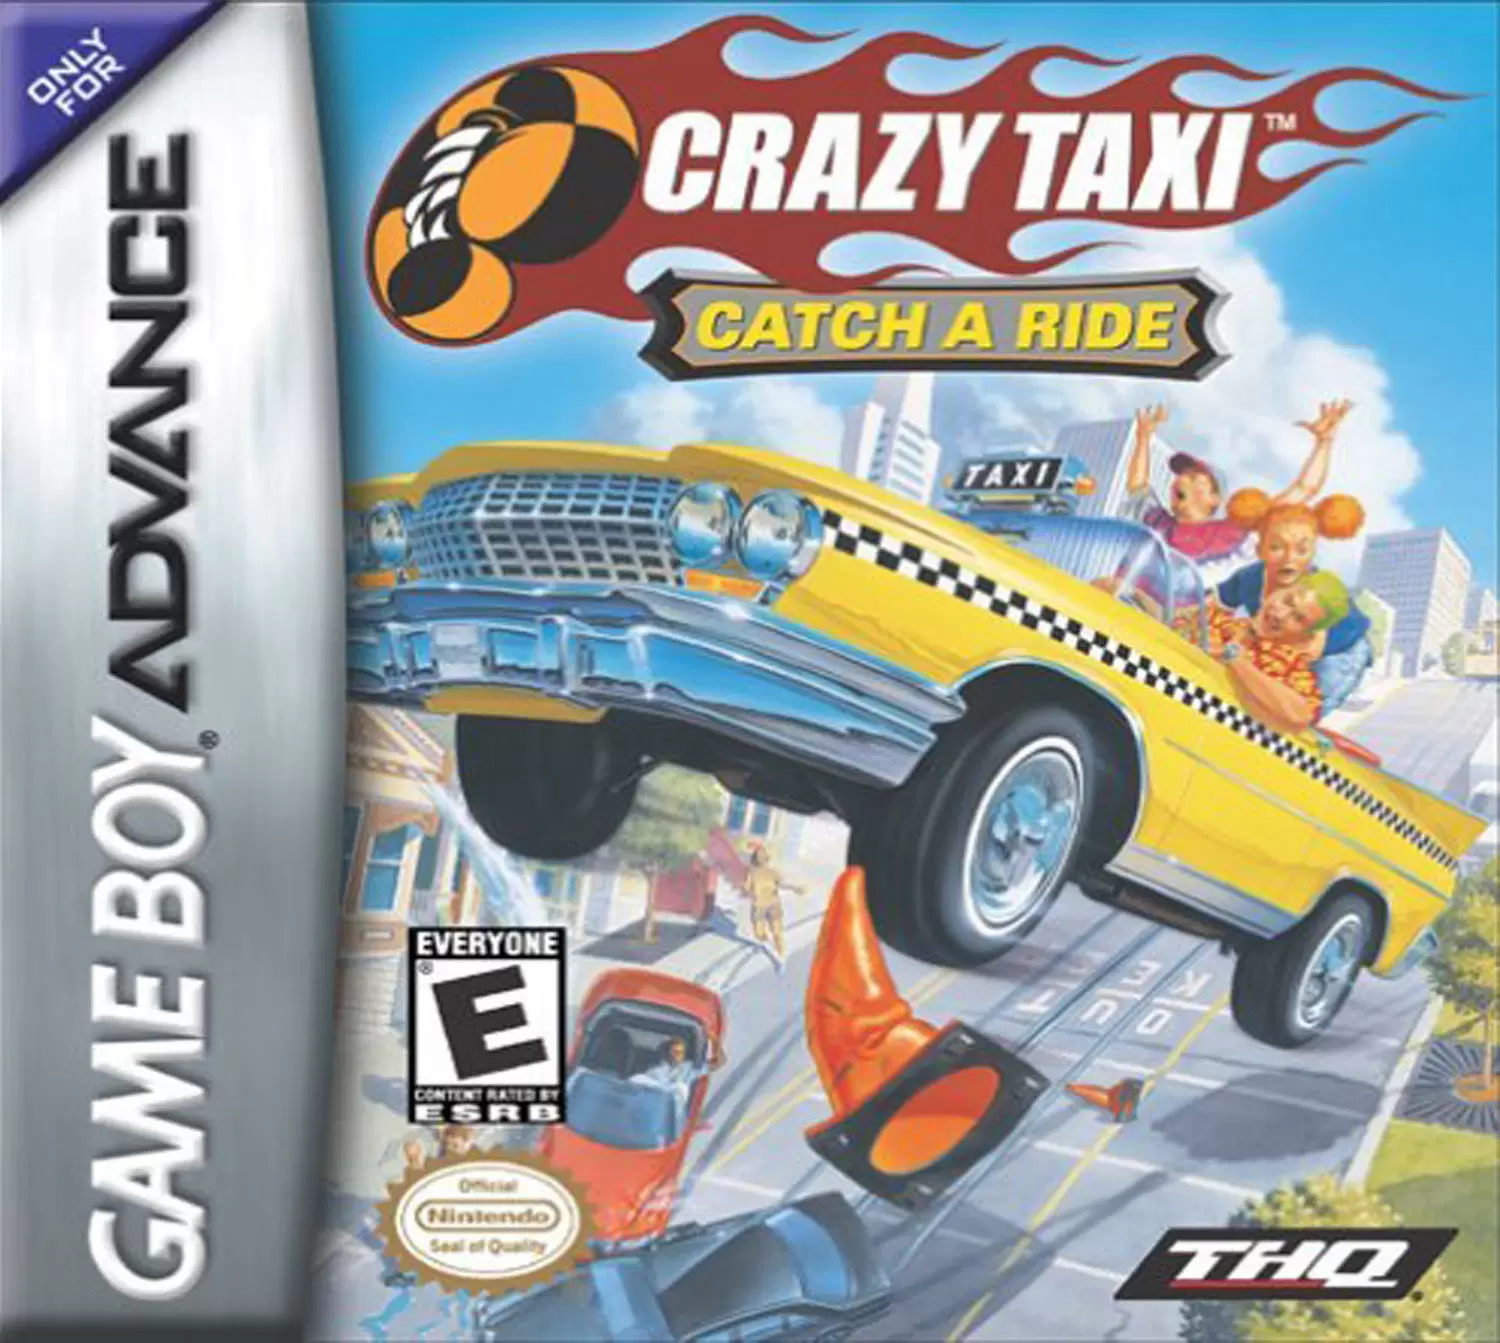 Game Boy Advance Games - Crazy Taxi: Catch a Ride